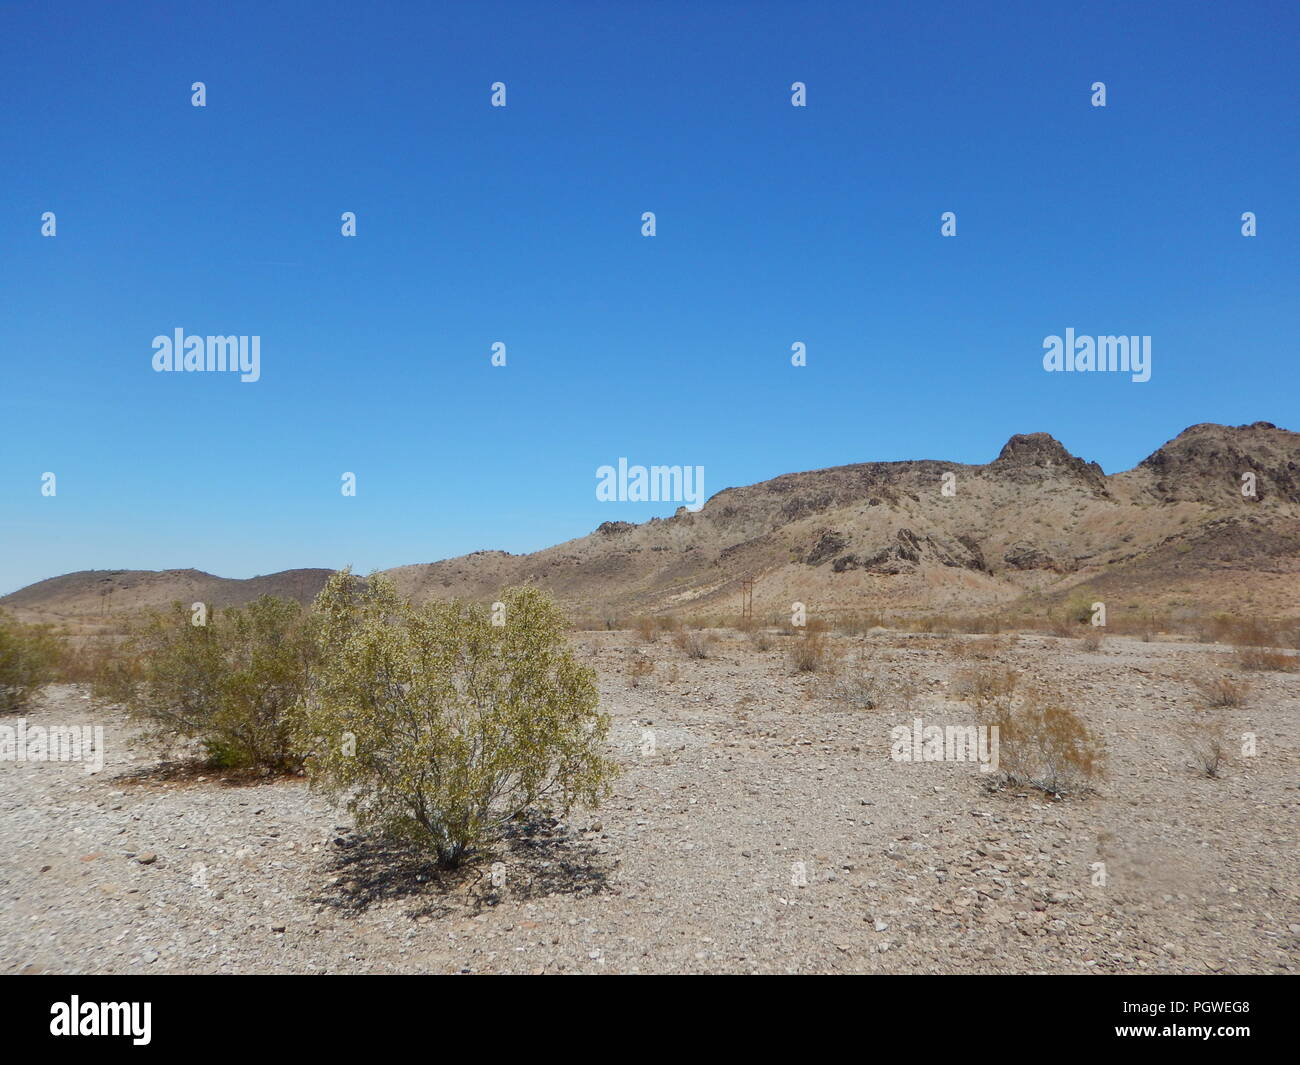 Barren desert landscape with rocky barren desert mountains under blue sky. Stock Photo